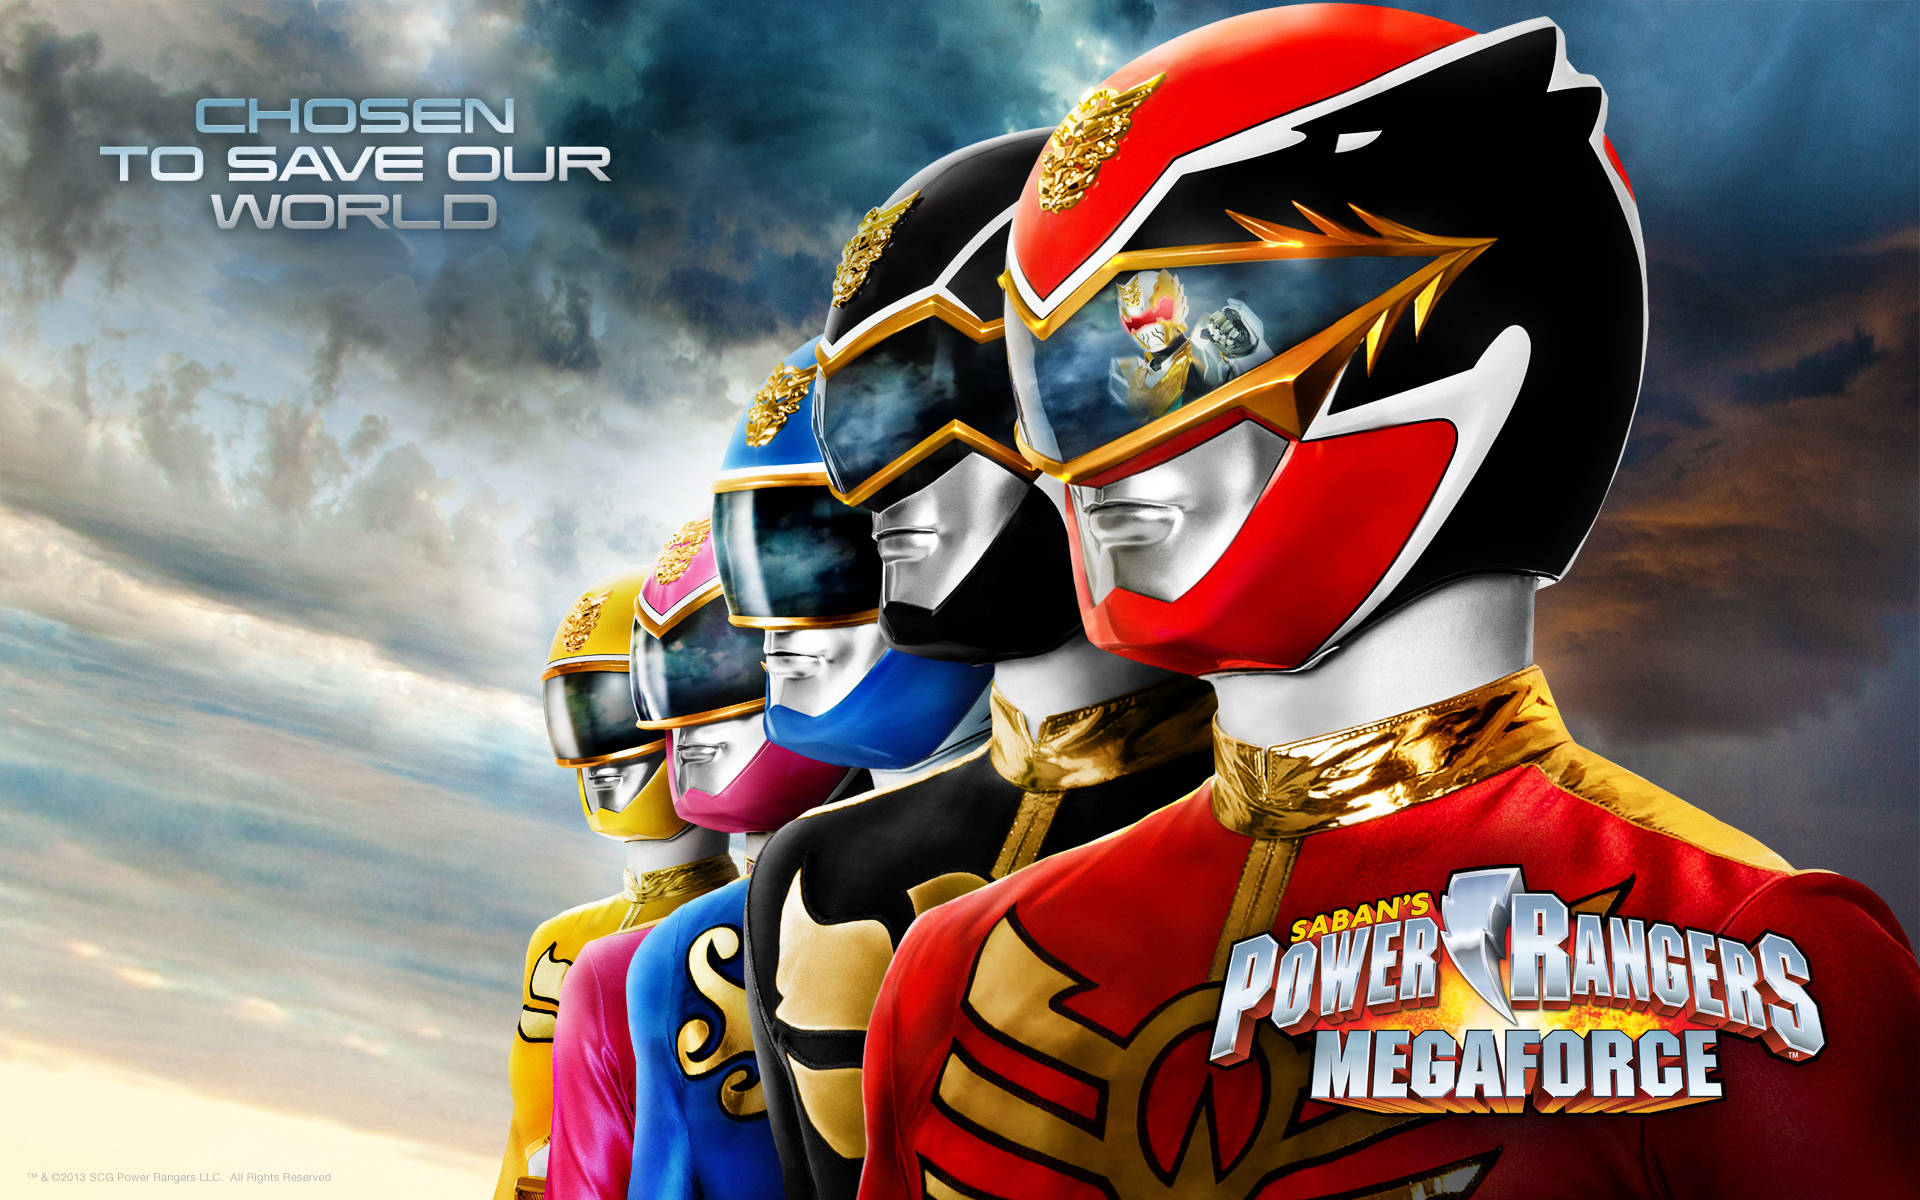 Saban's Power Rangers Megaforce Background